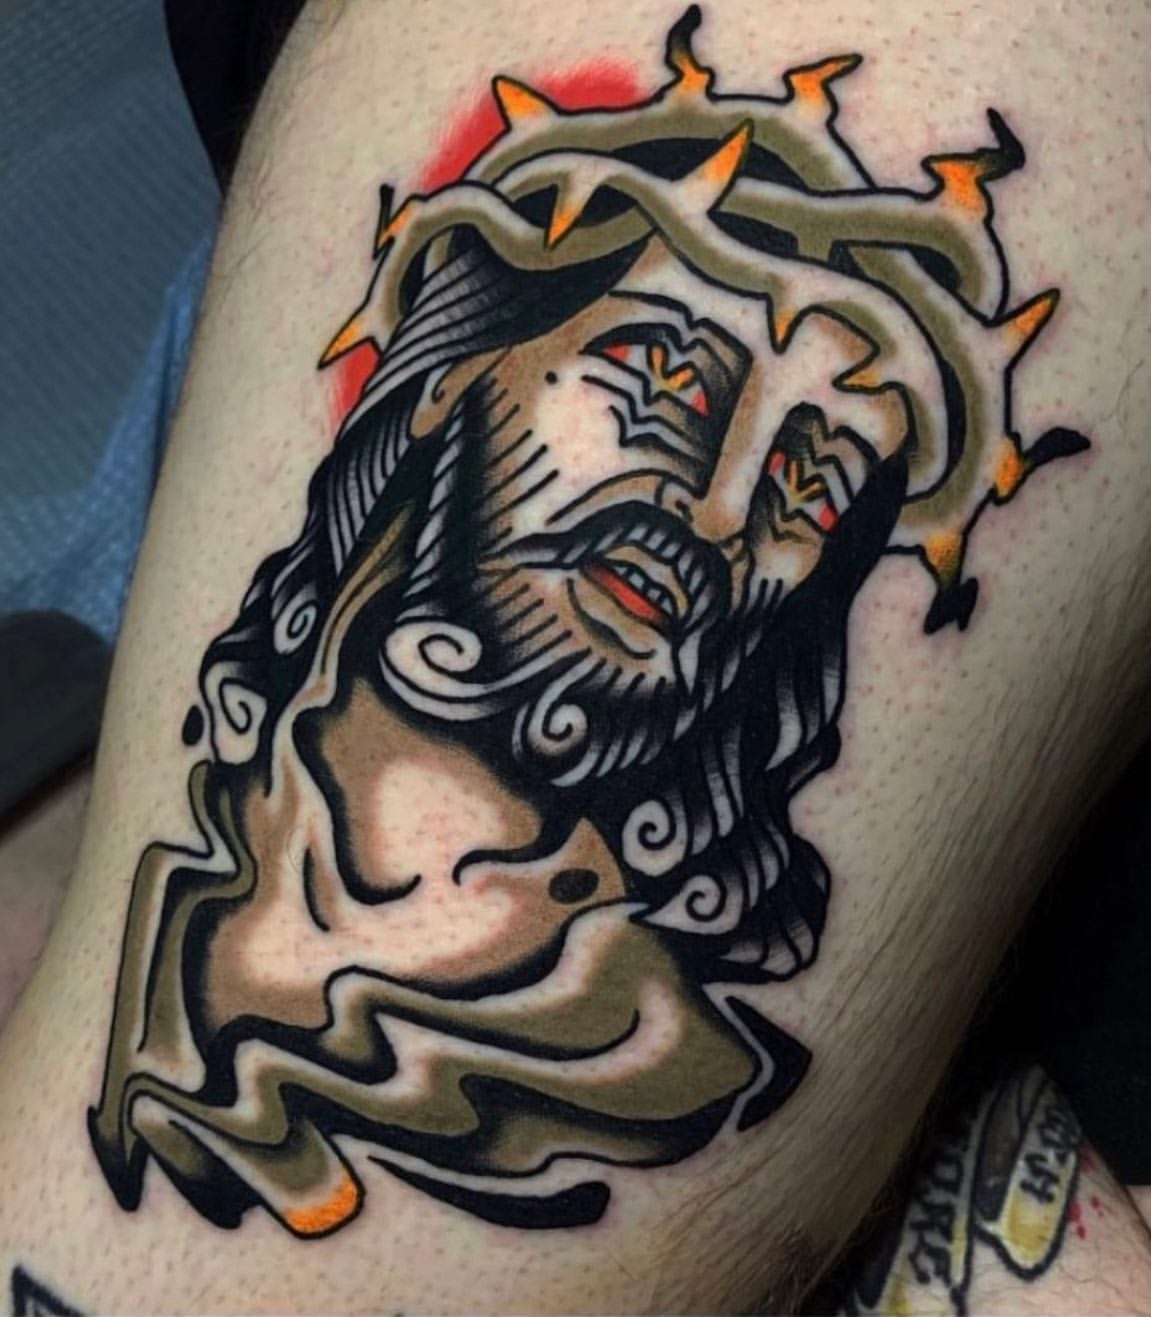 Jesus face | Jesus tattoo, Jesus tattoo design, Jesus face